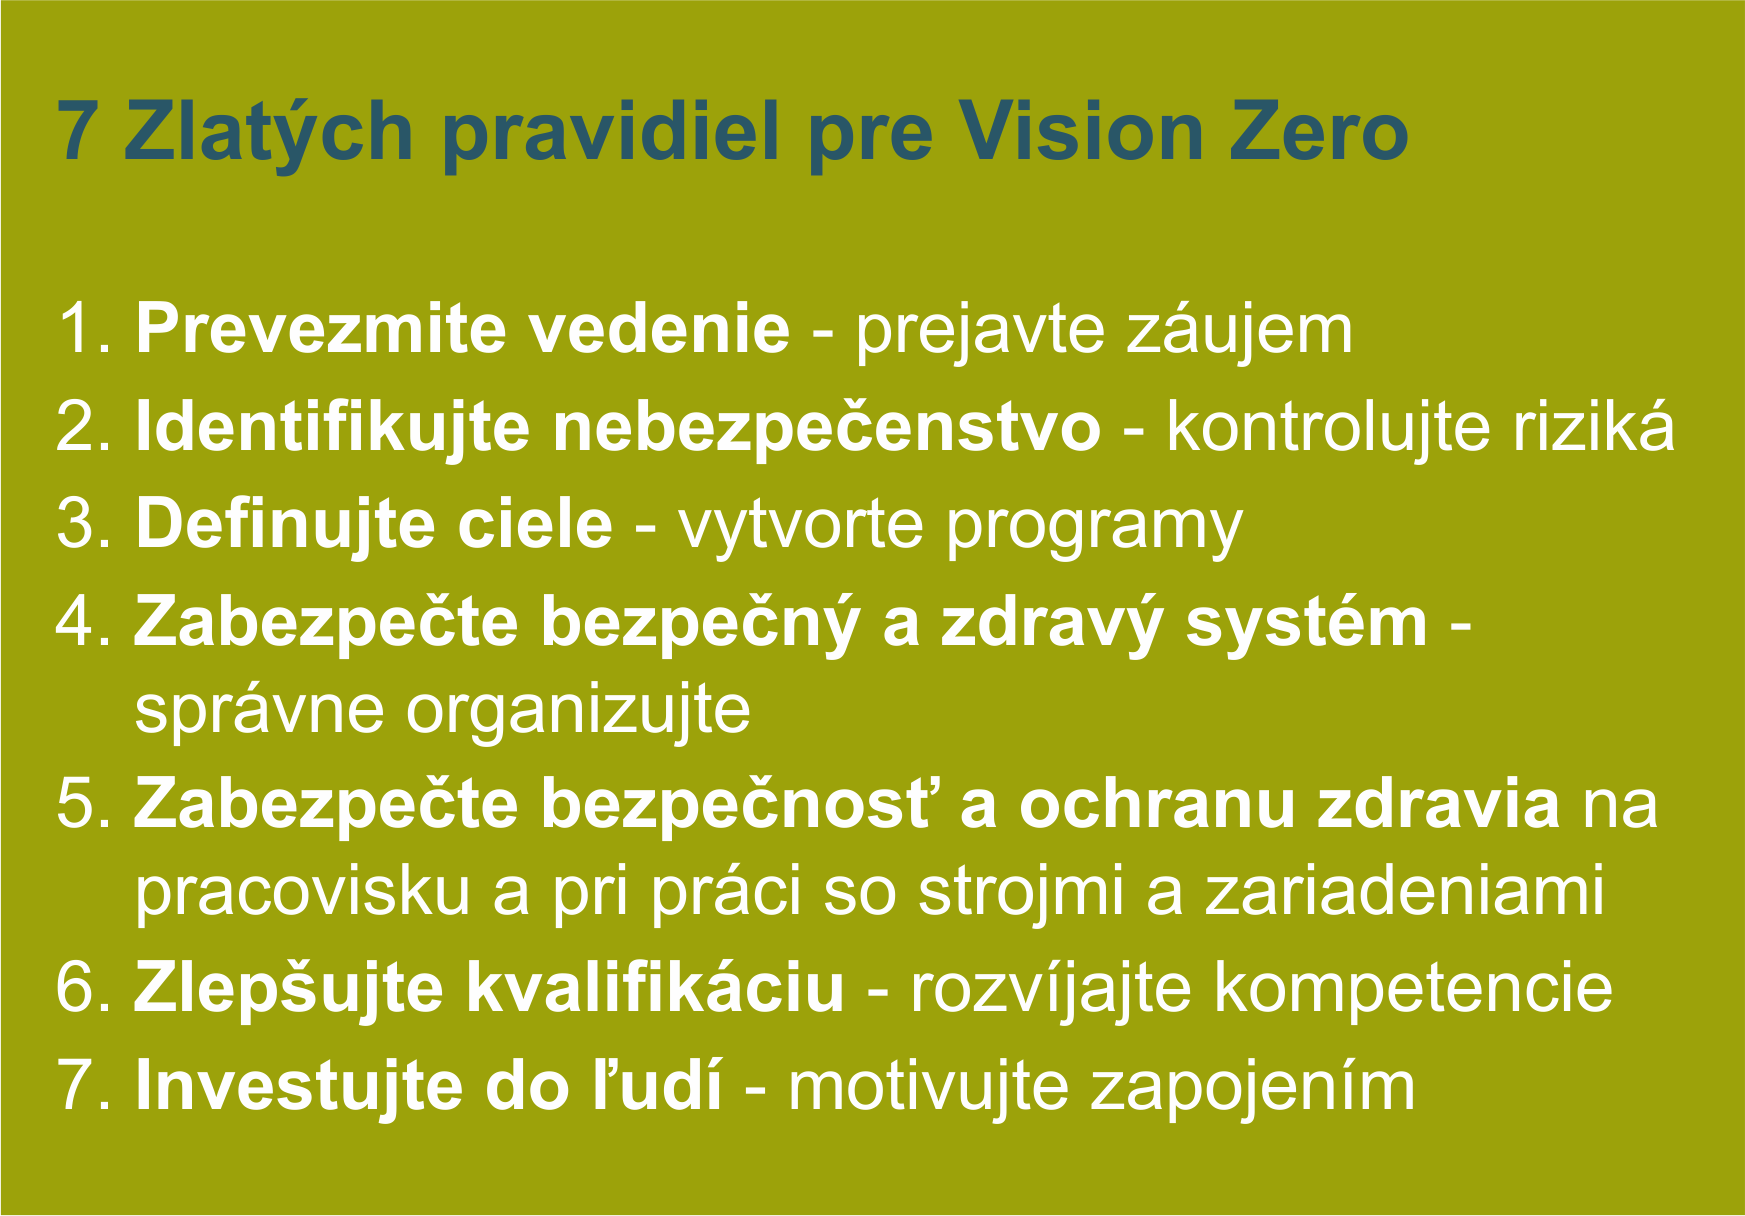 Vision zero - 7 zlatých pravidiel